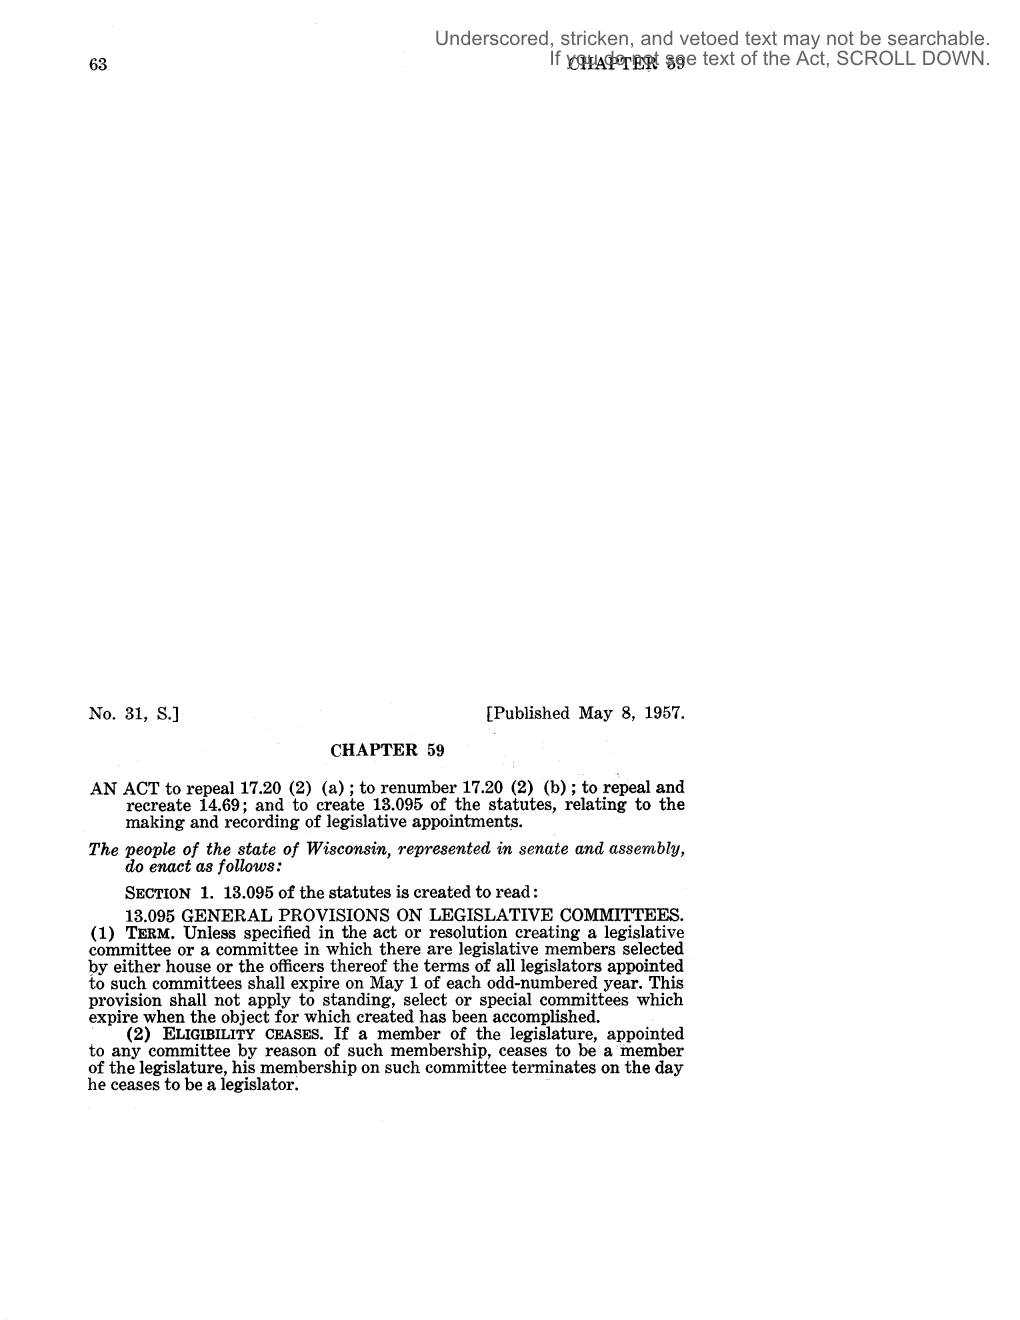 1957 Wisconsin Act 59